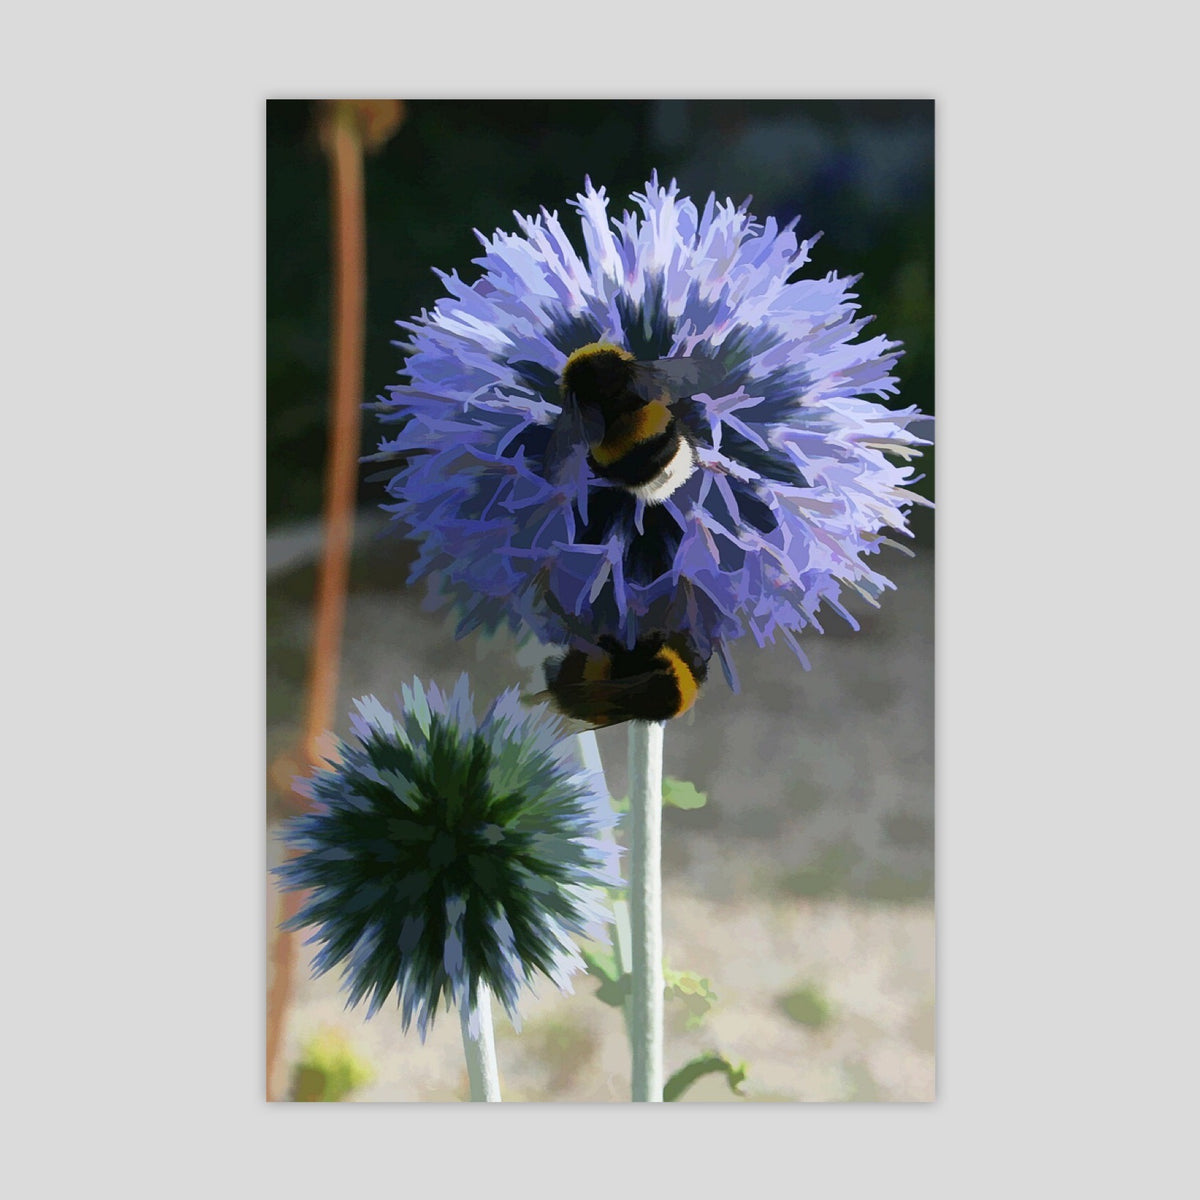 Bumblebee 1 (3312R-M4)